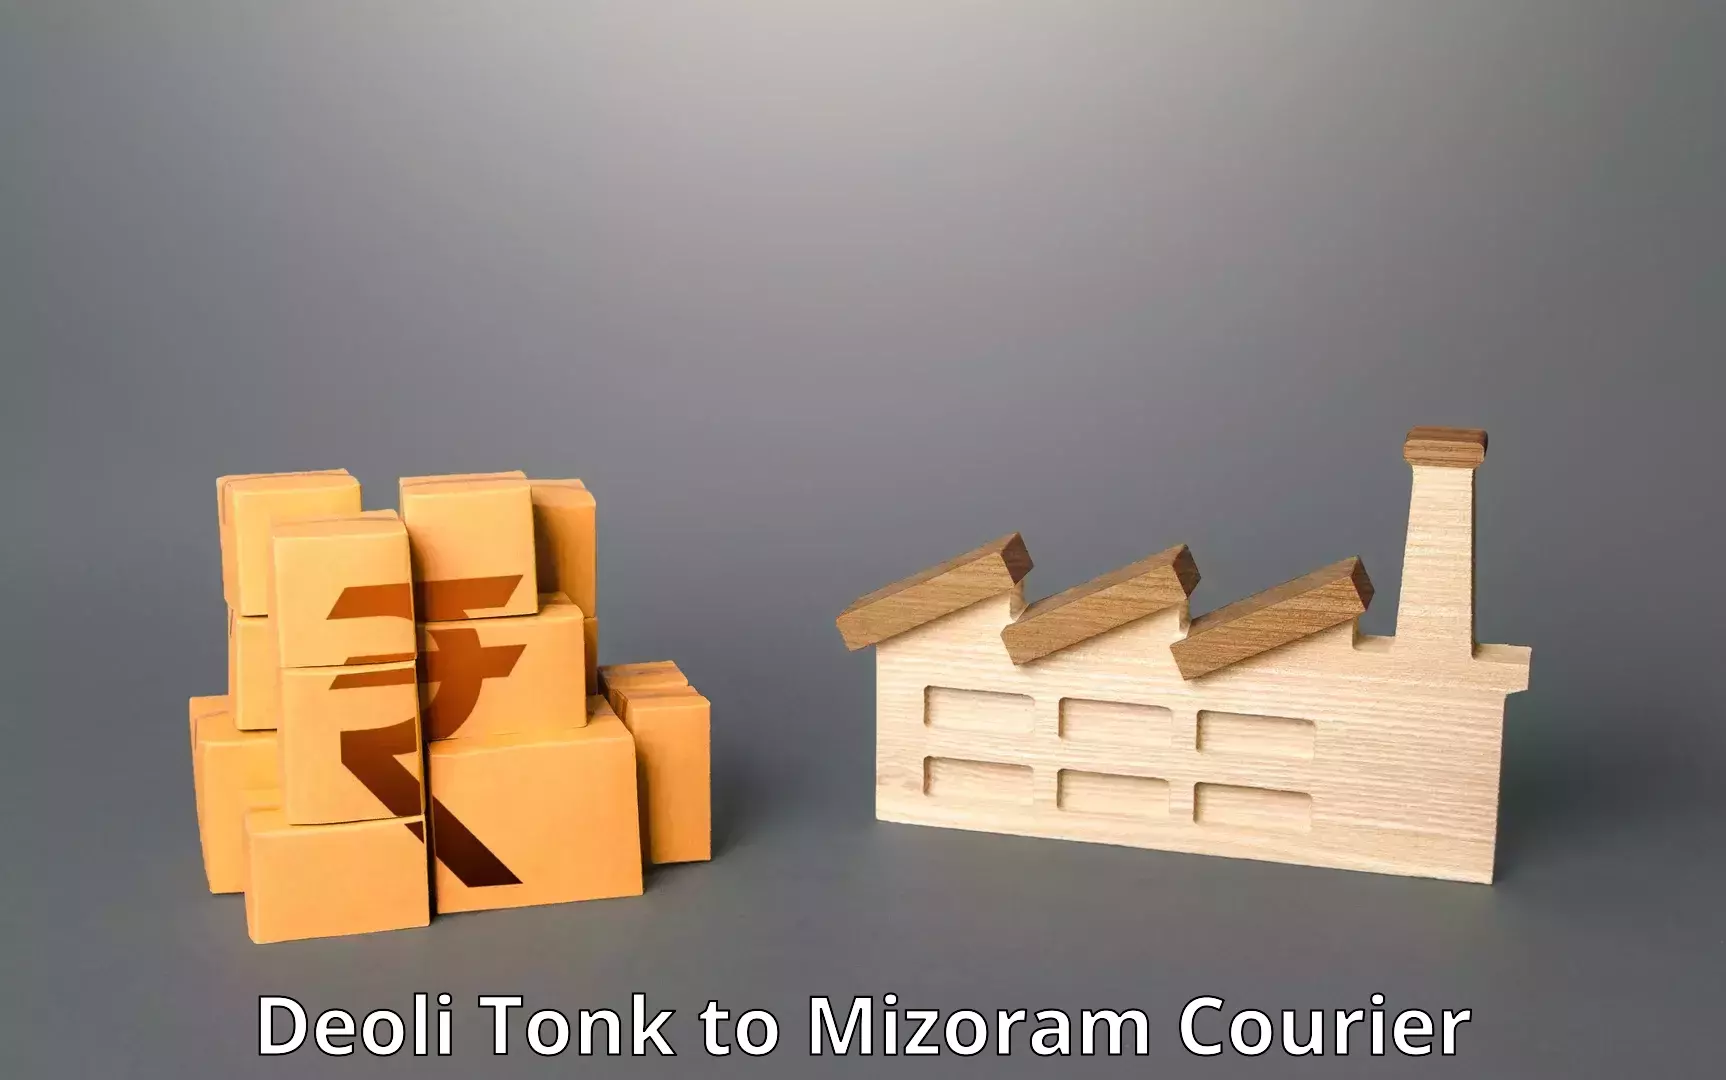 Courier service comparison Deoli Tonk to Mizoram